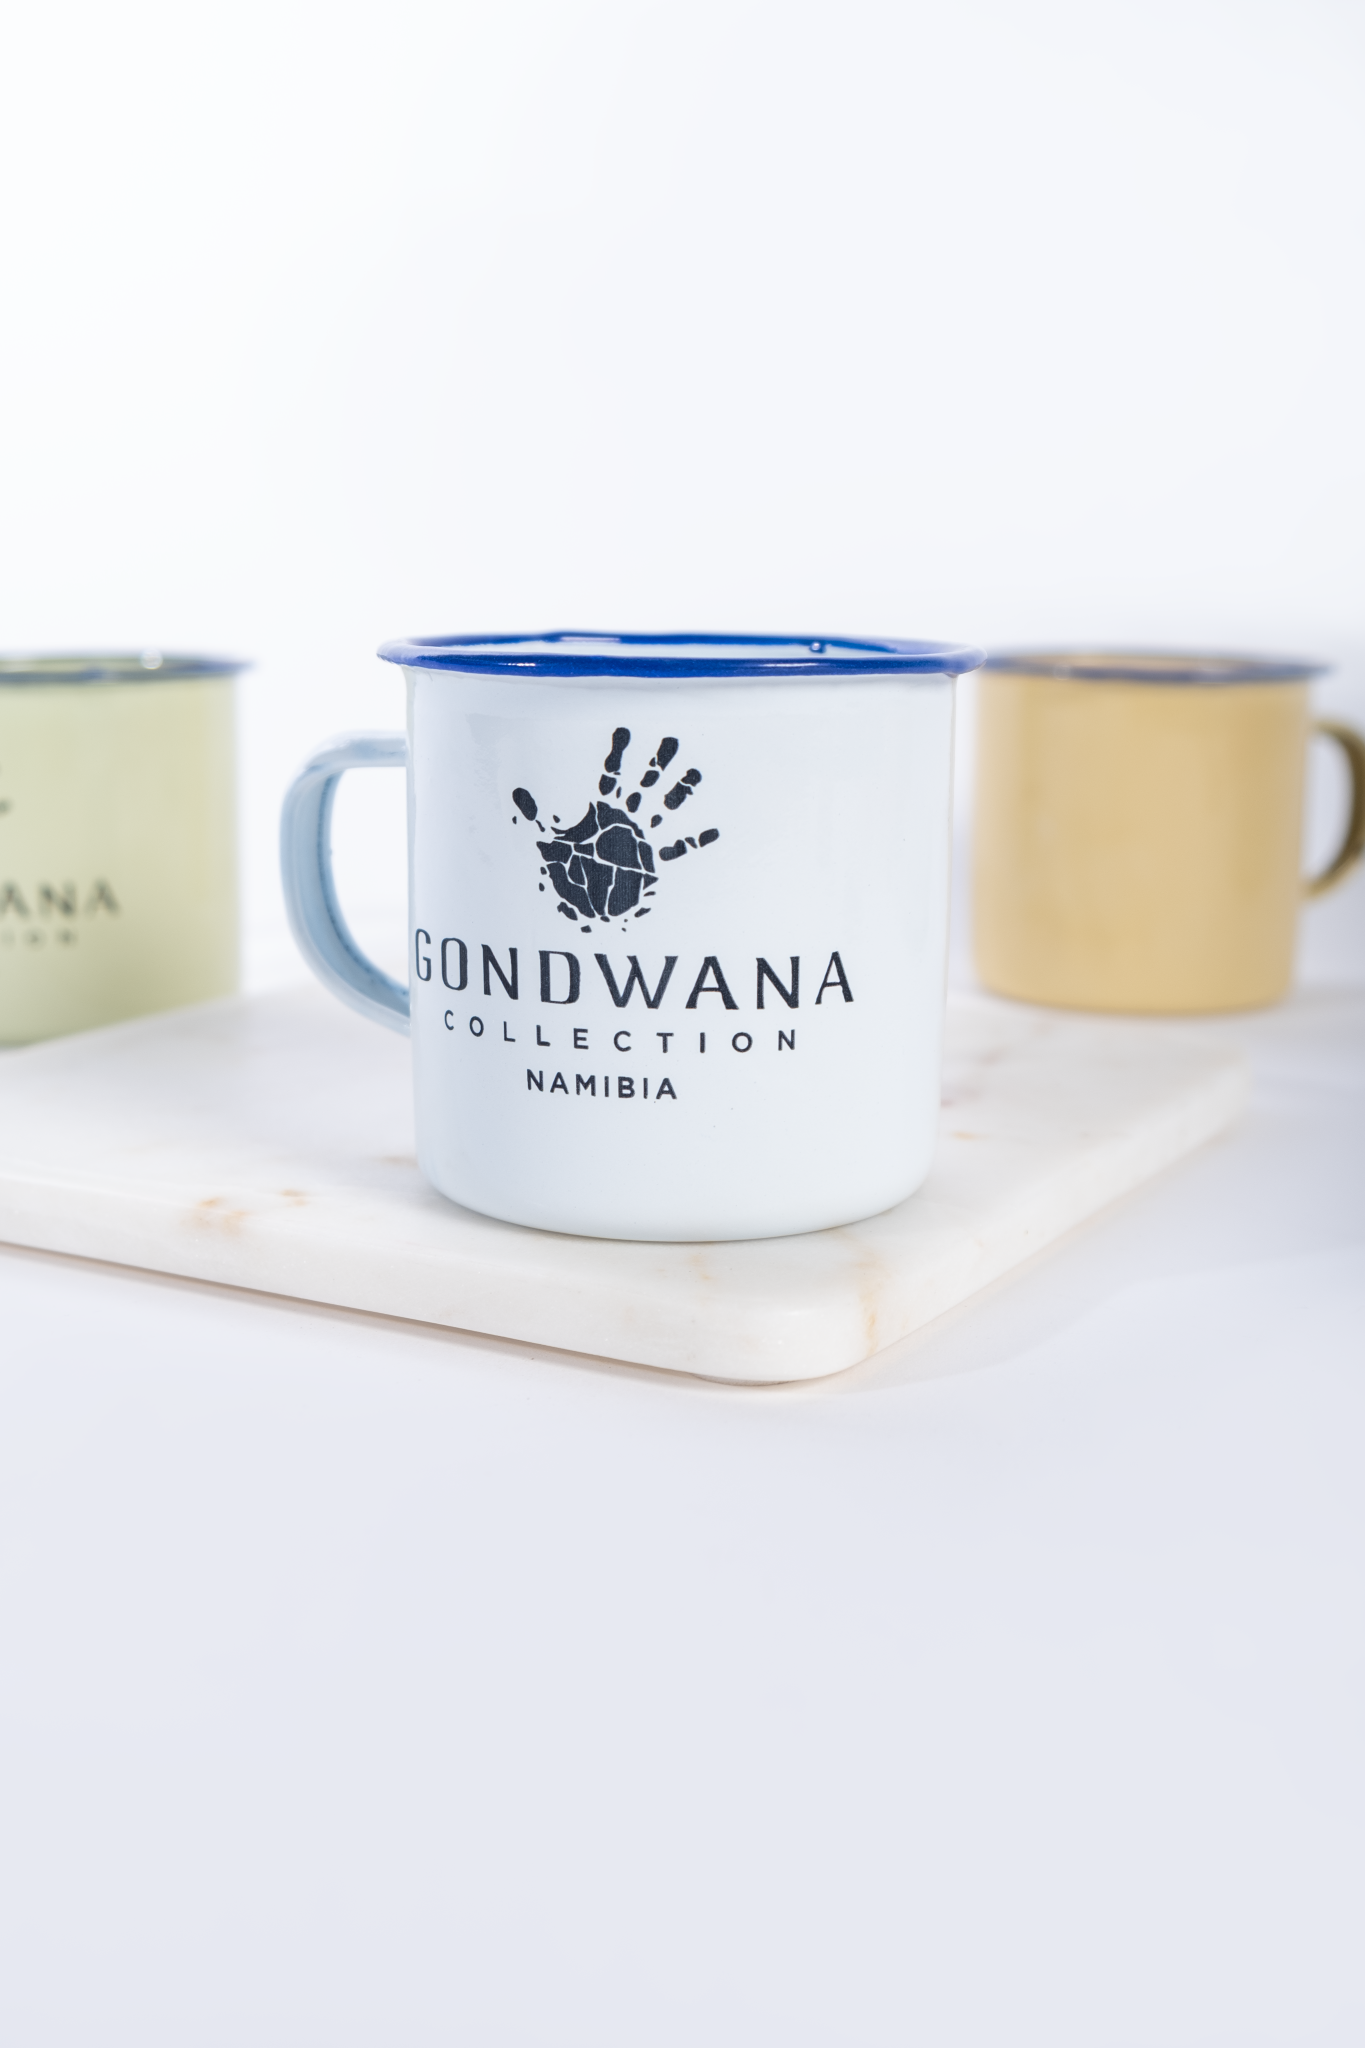 Gondwana Logo Enamel Mug 250ml